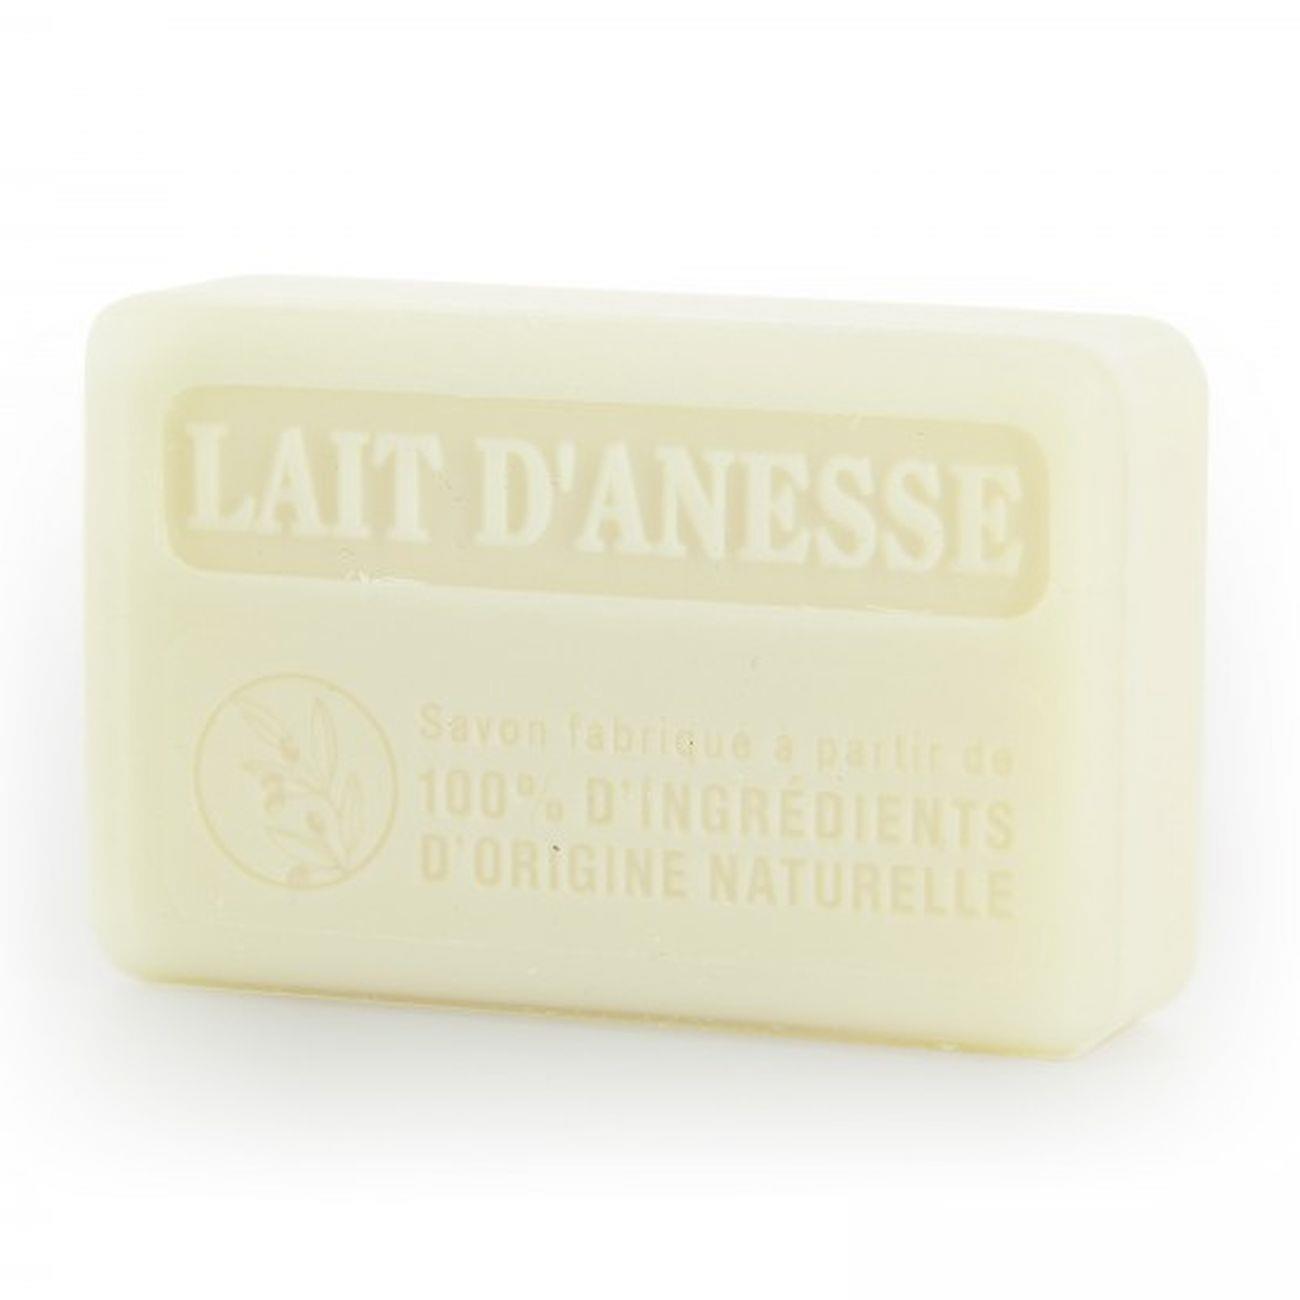 Marseille Soap 100% Natural Lait d'Anesse 5% (Donkey Milk) Fragrance Free 125g